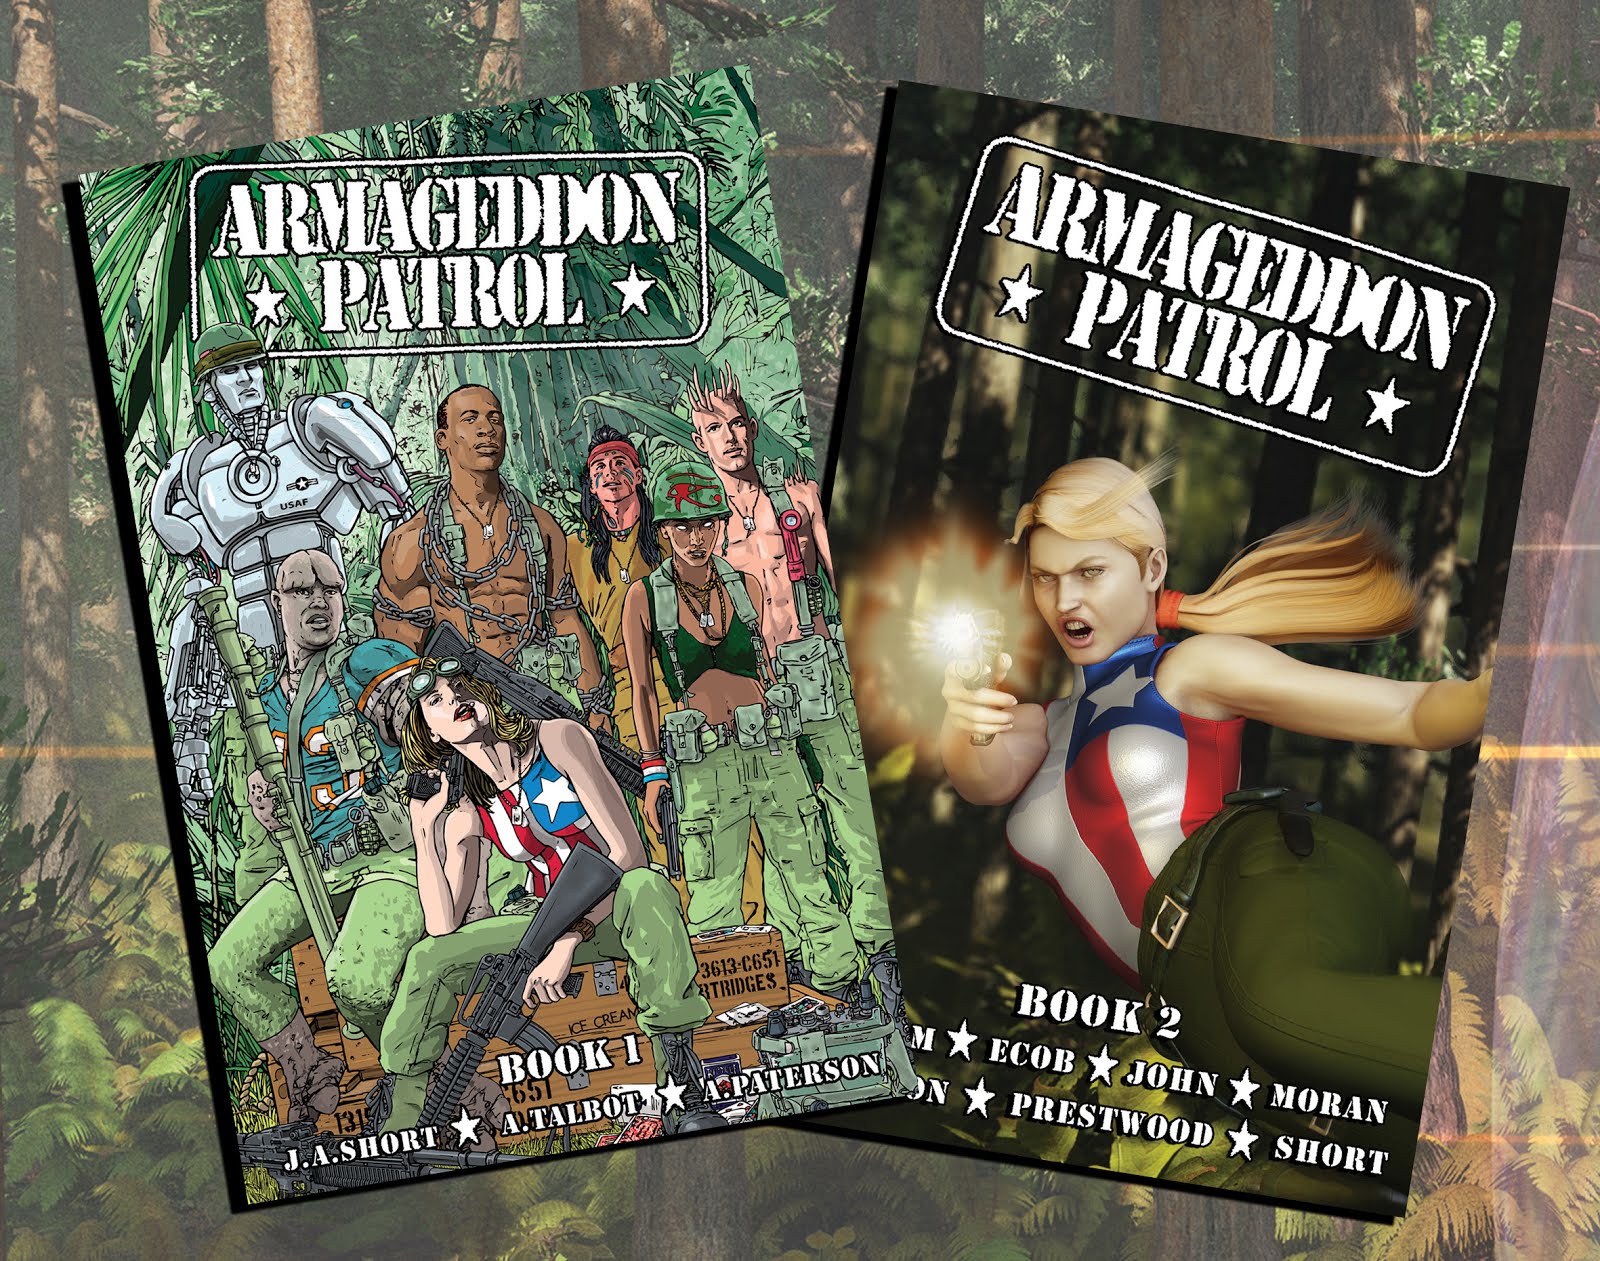 Buy ARMAGEDDON PATROL BOOKS 1 + 2 TOGETHER below!